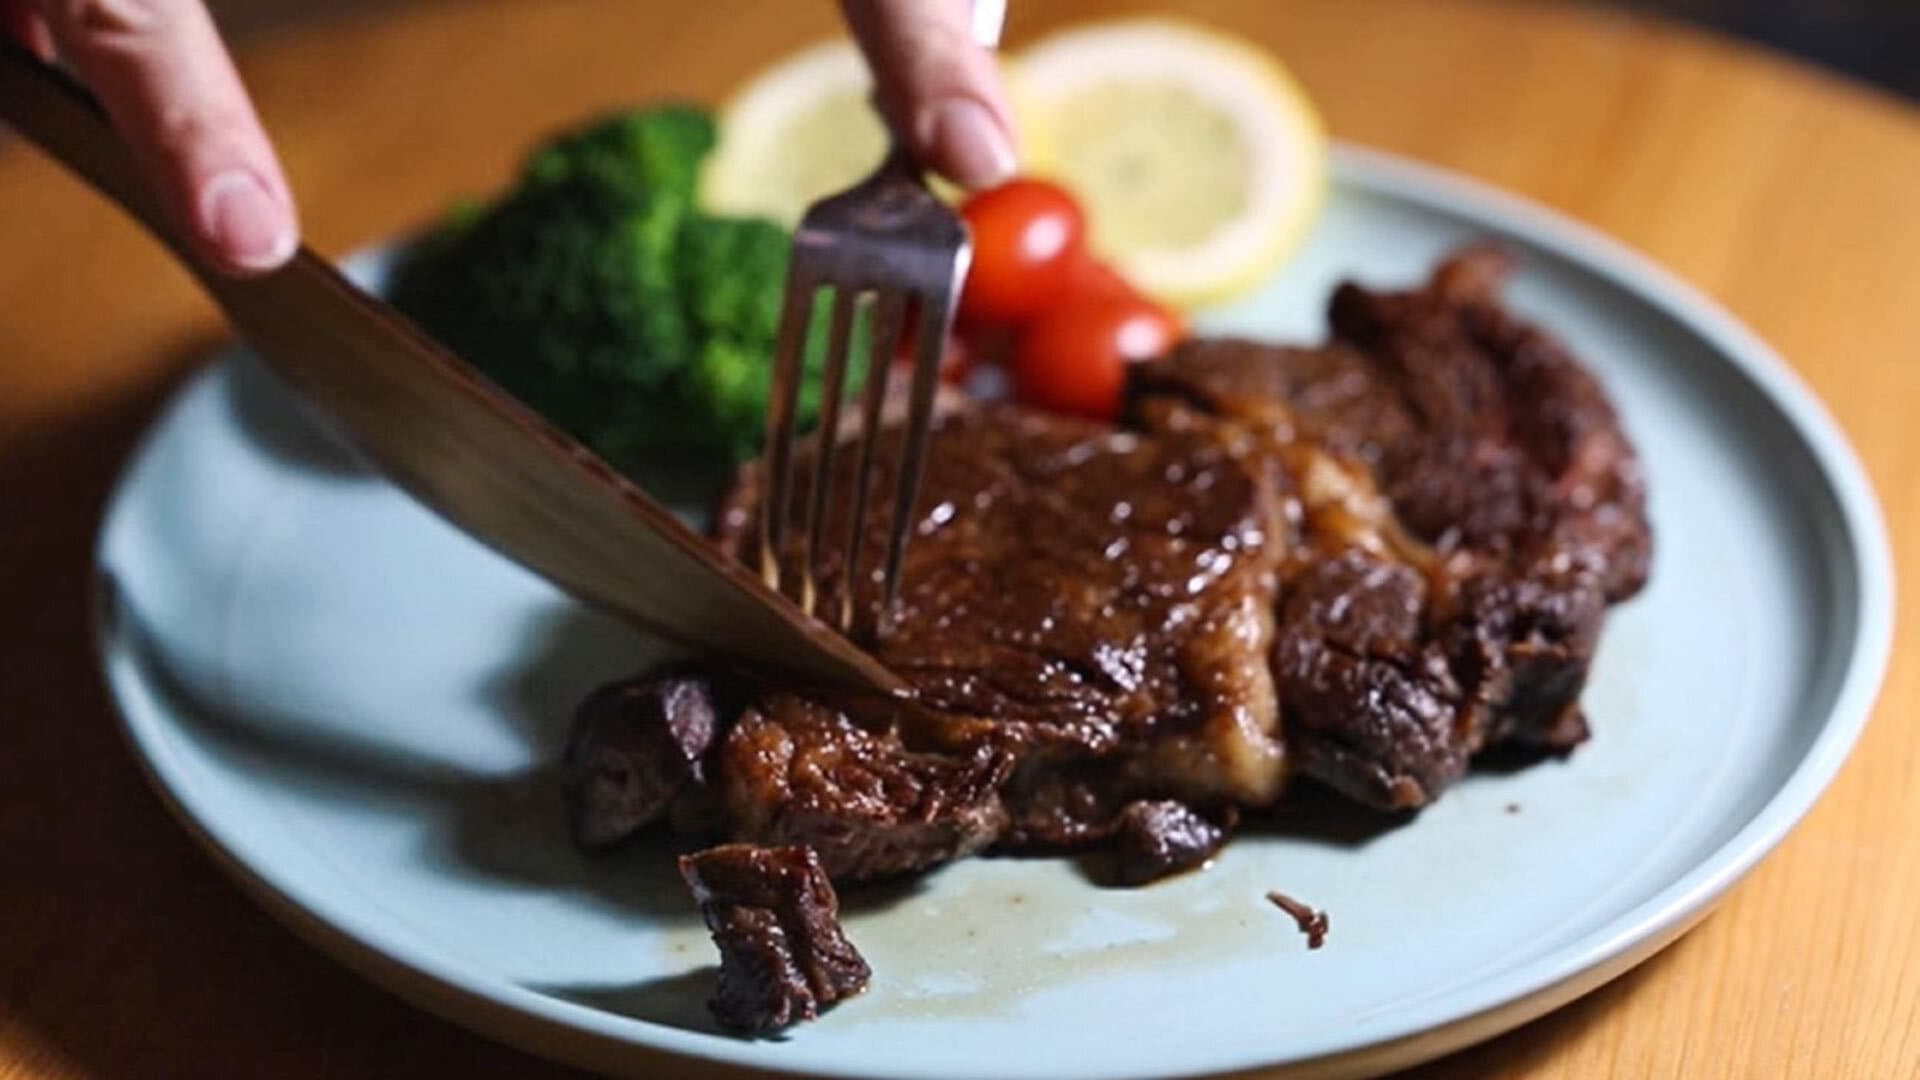 Super-sharp wooden knife cuts steak